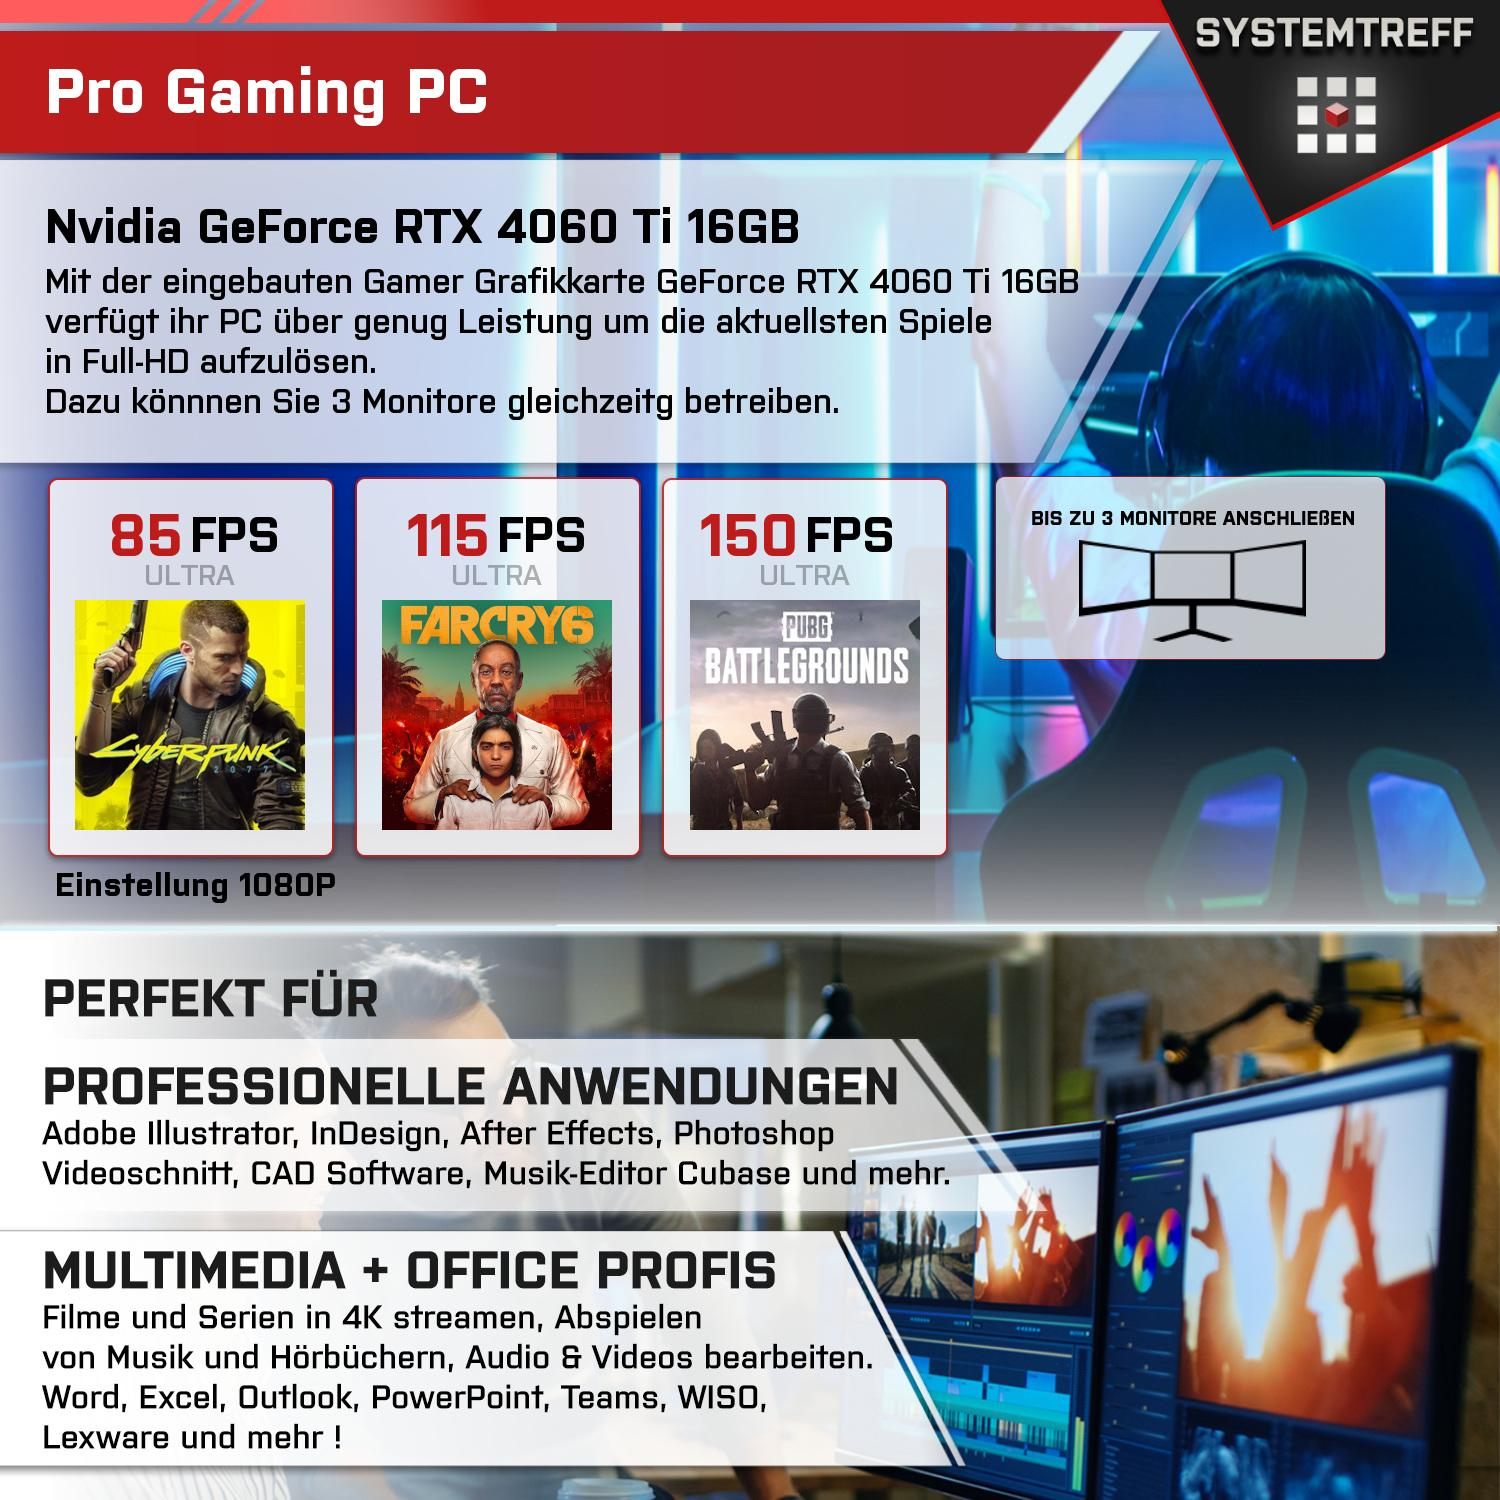 SYSTEMTREFF Pro Gaming 32 GeForce 9 RTX™ AMD Ti Gaming 4060 PC Ryzen™ NVIDIA GB Windows AMD Prozessor, 9 GB Pro, 7950X, RAM, 1000 11 Ryzen mit mSSD